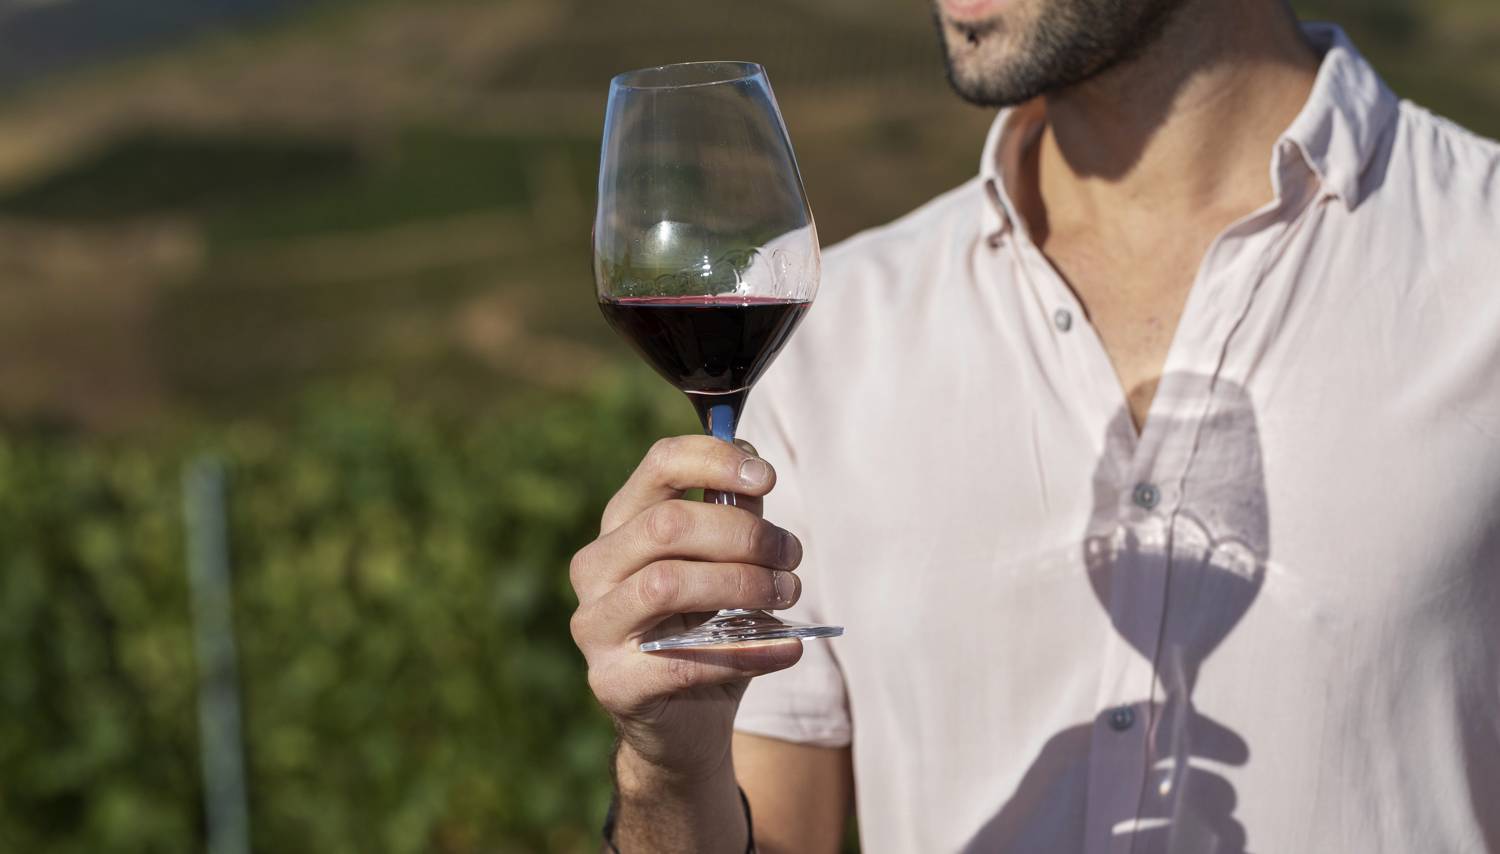 https://www.virginwines.co.uk/hub/wp-content/uploads/2021/05/Man-holding-a-glass-of-Beaujolais-in-a-vineyard-in-the-sunshine.jpg